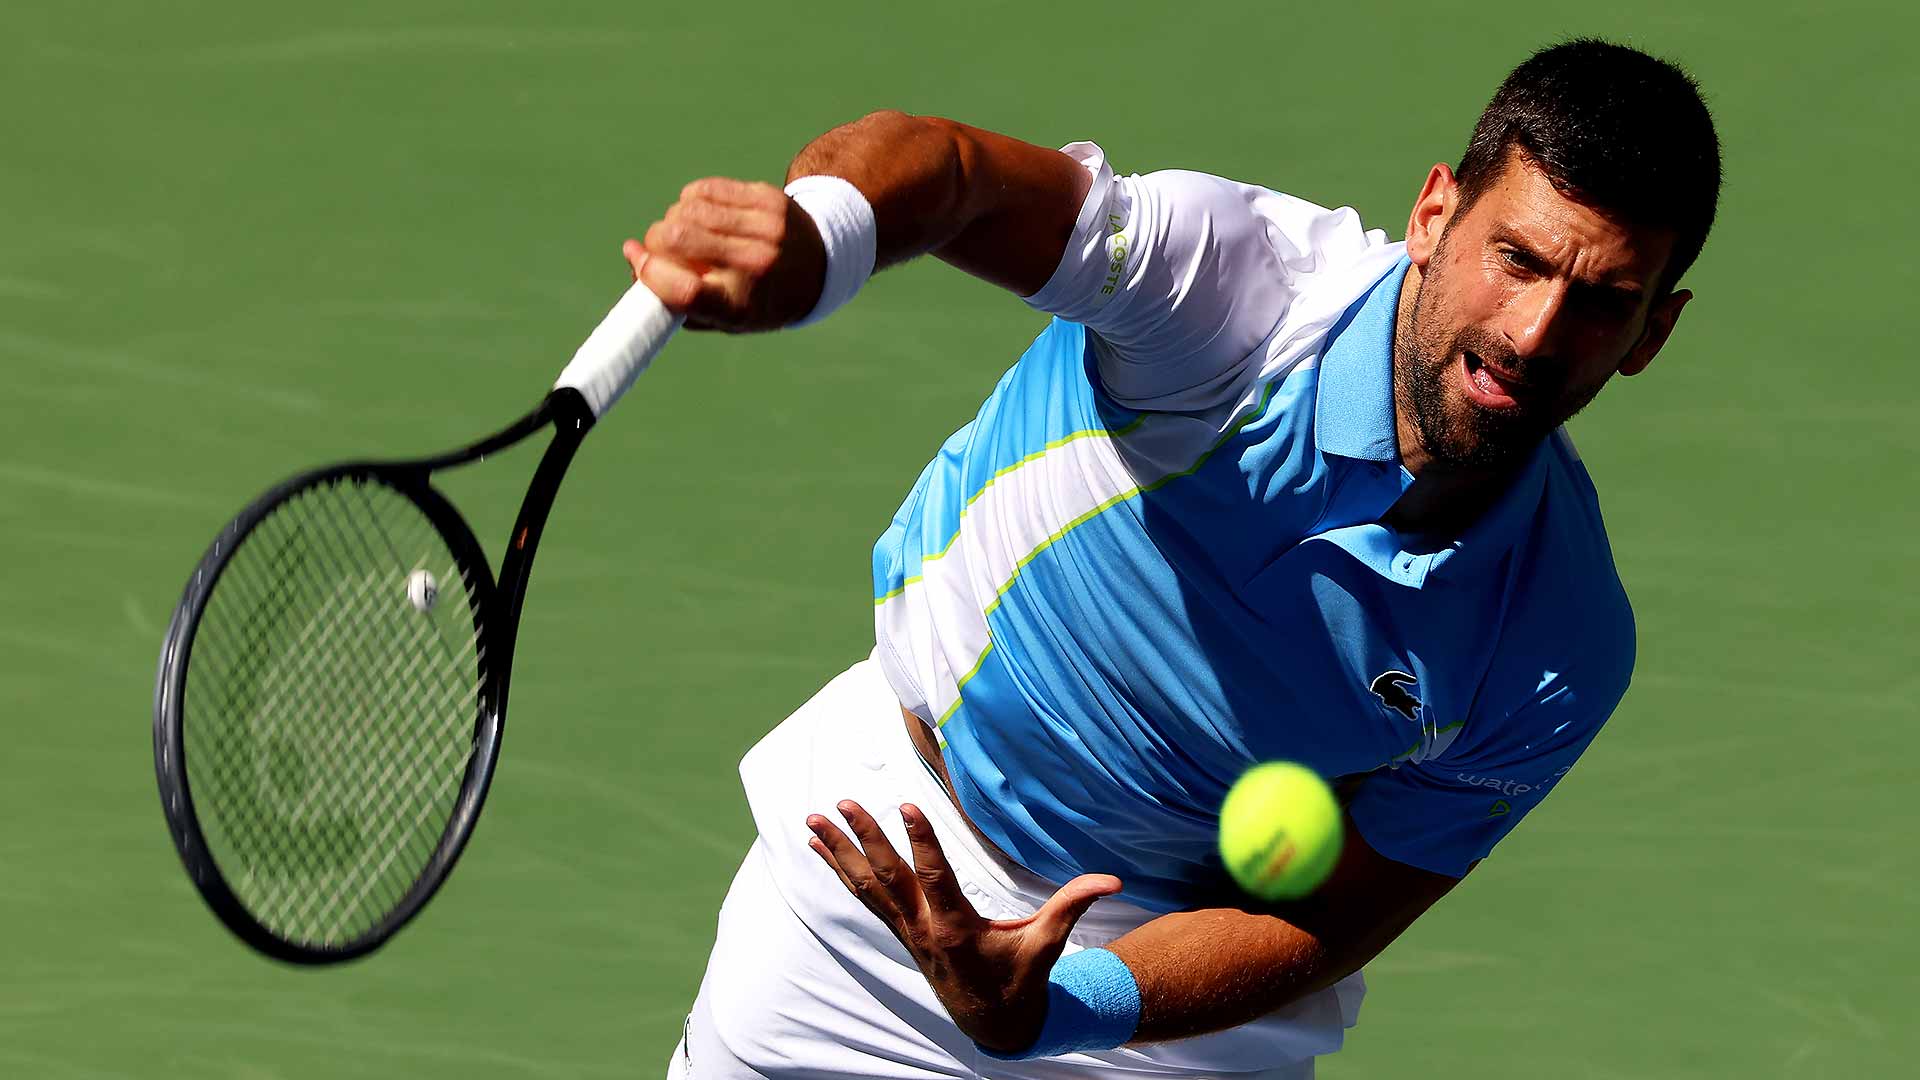 Novak Djokovic seeks a 10th US Open final appearance this fortnight.